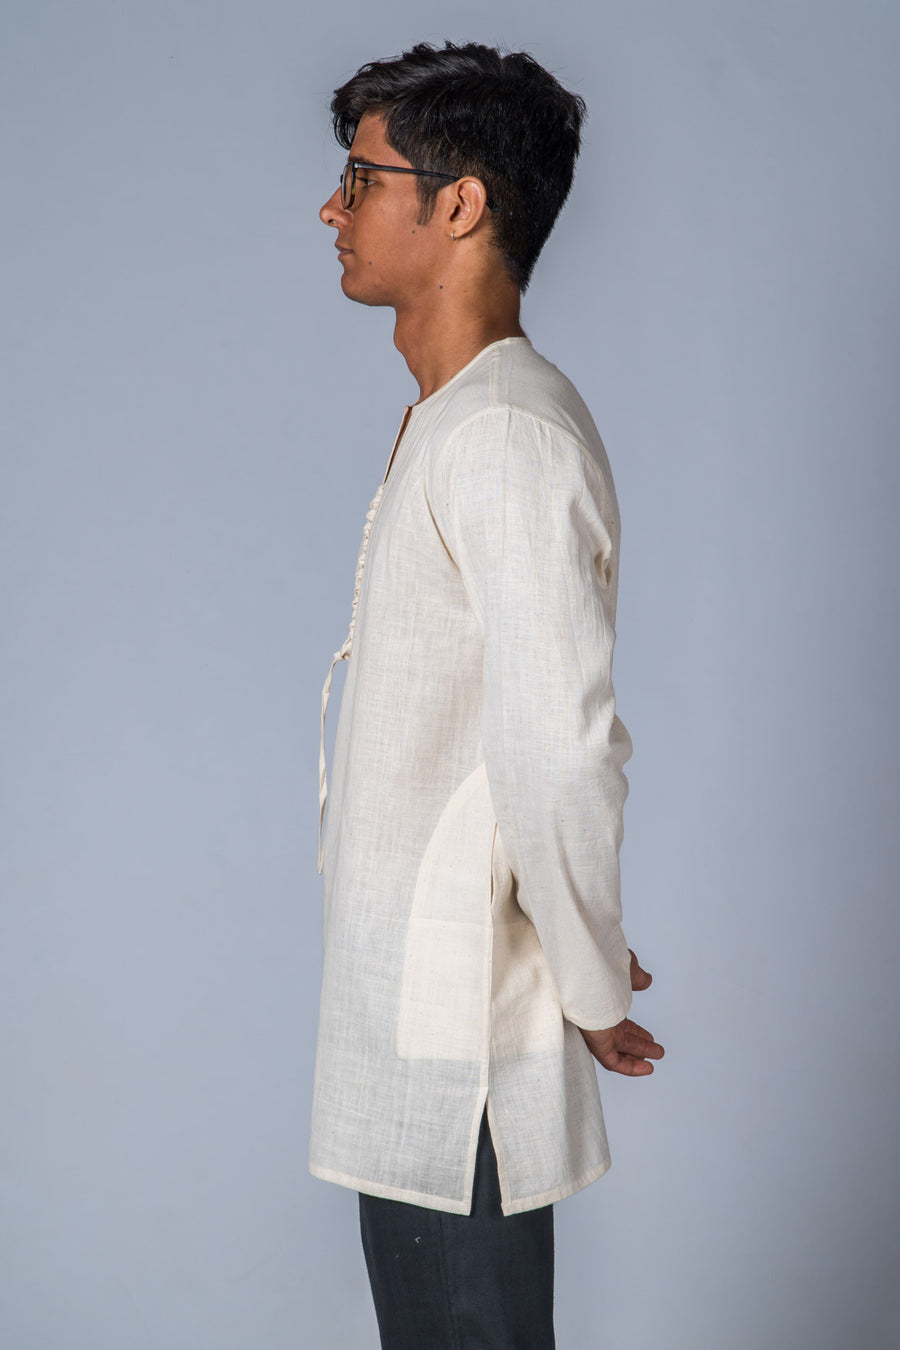 Off-White Handwoven Kurta with Pockets - HEM - Upasana Design Studio